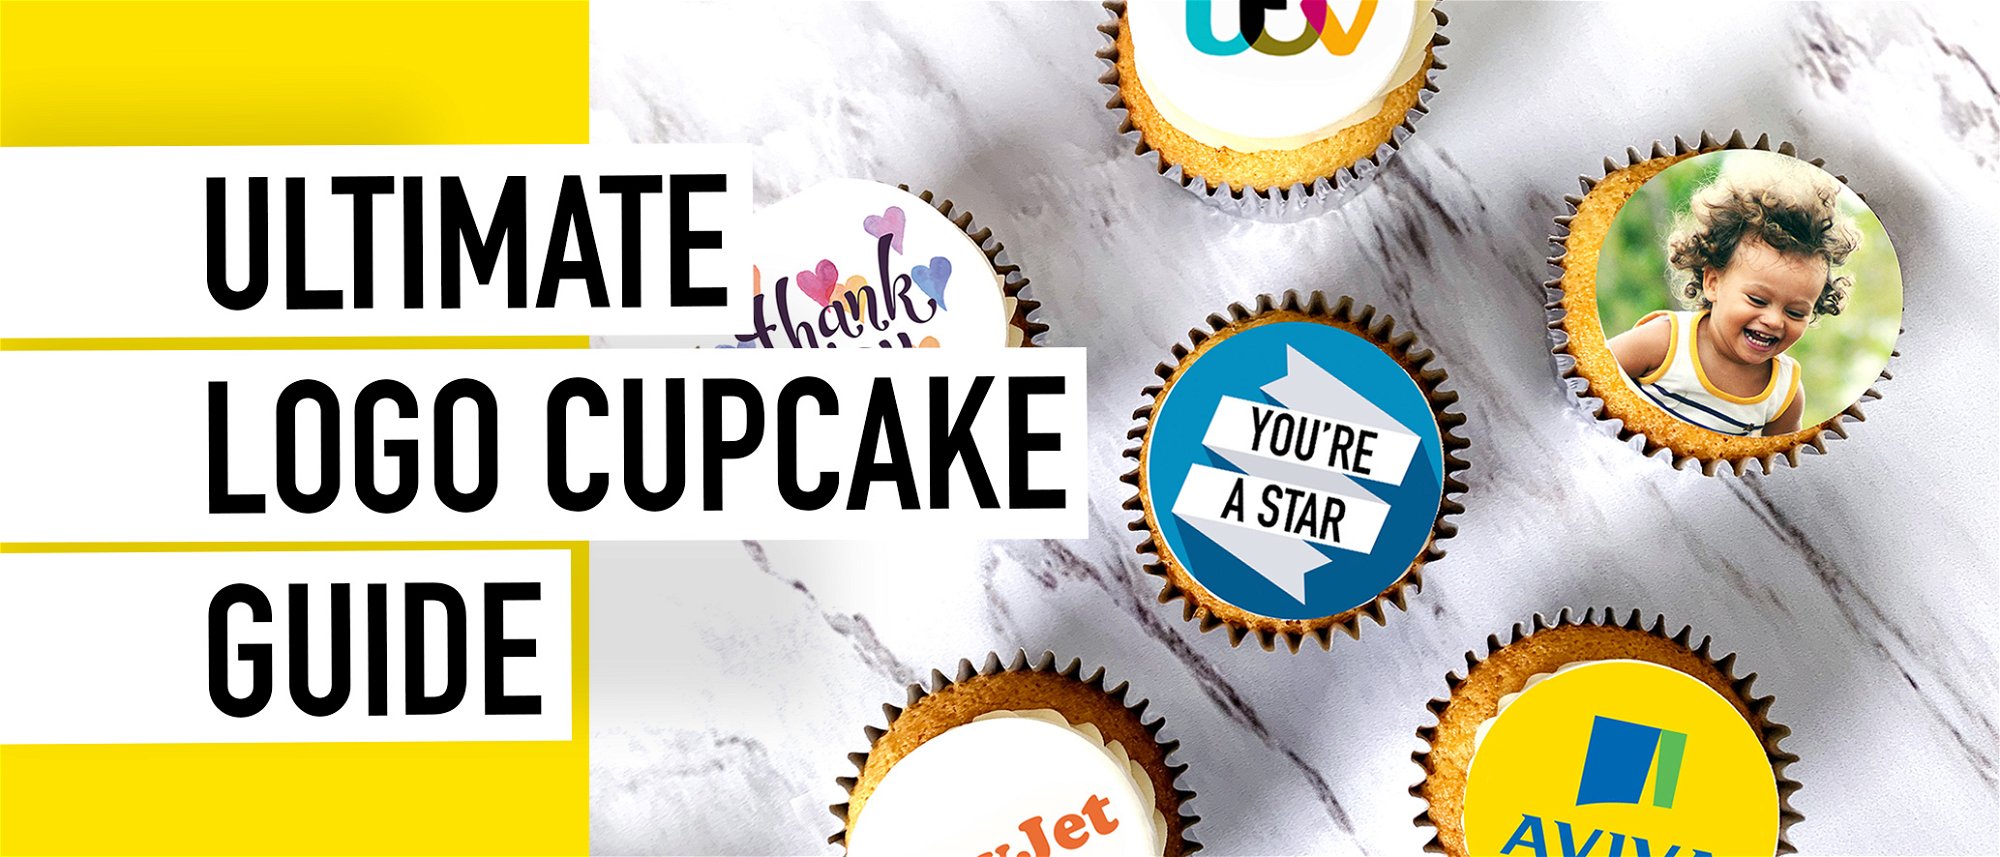 logo cupcakes delivered uk